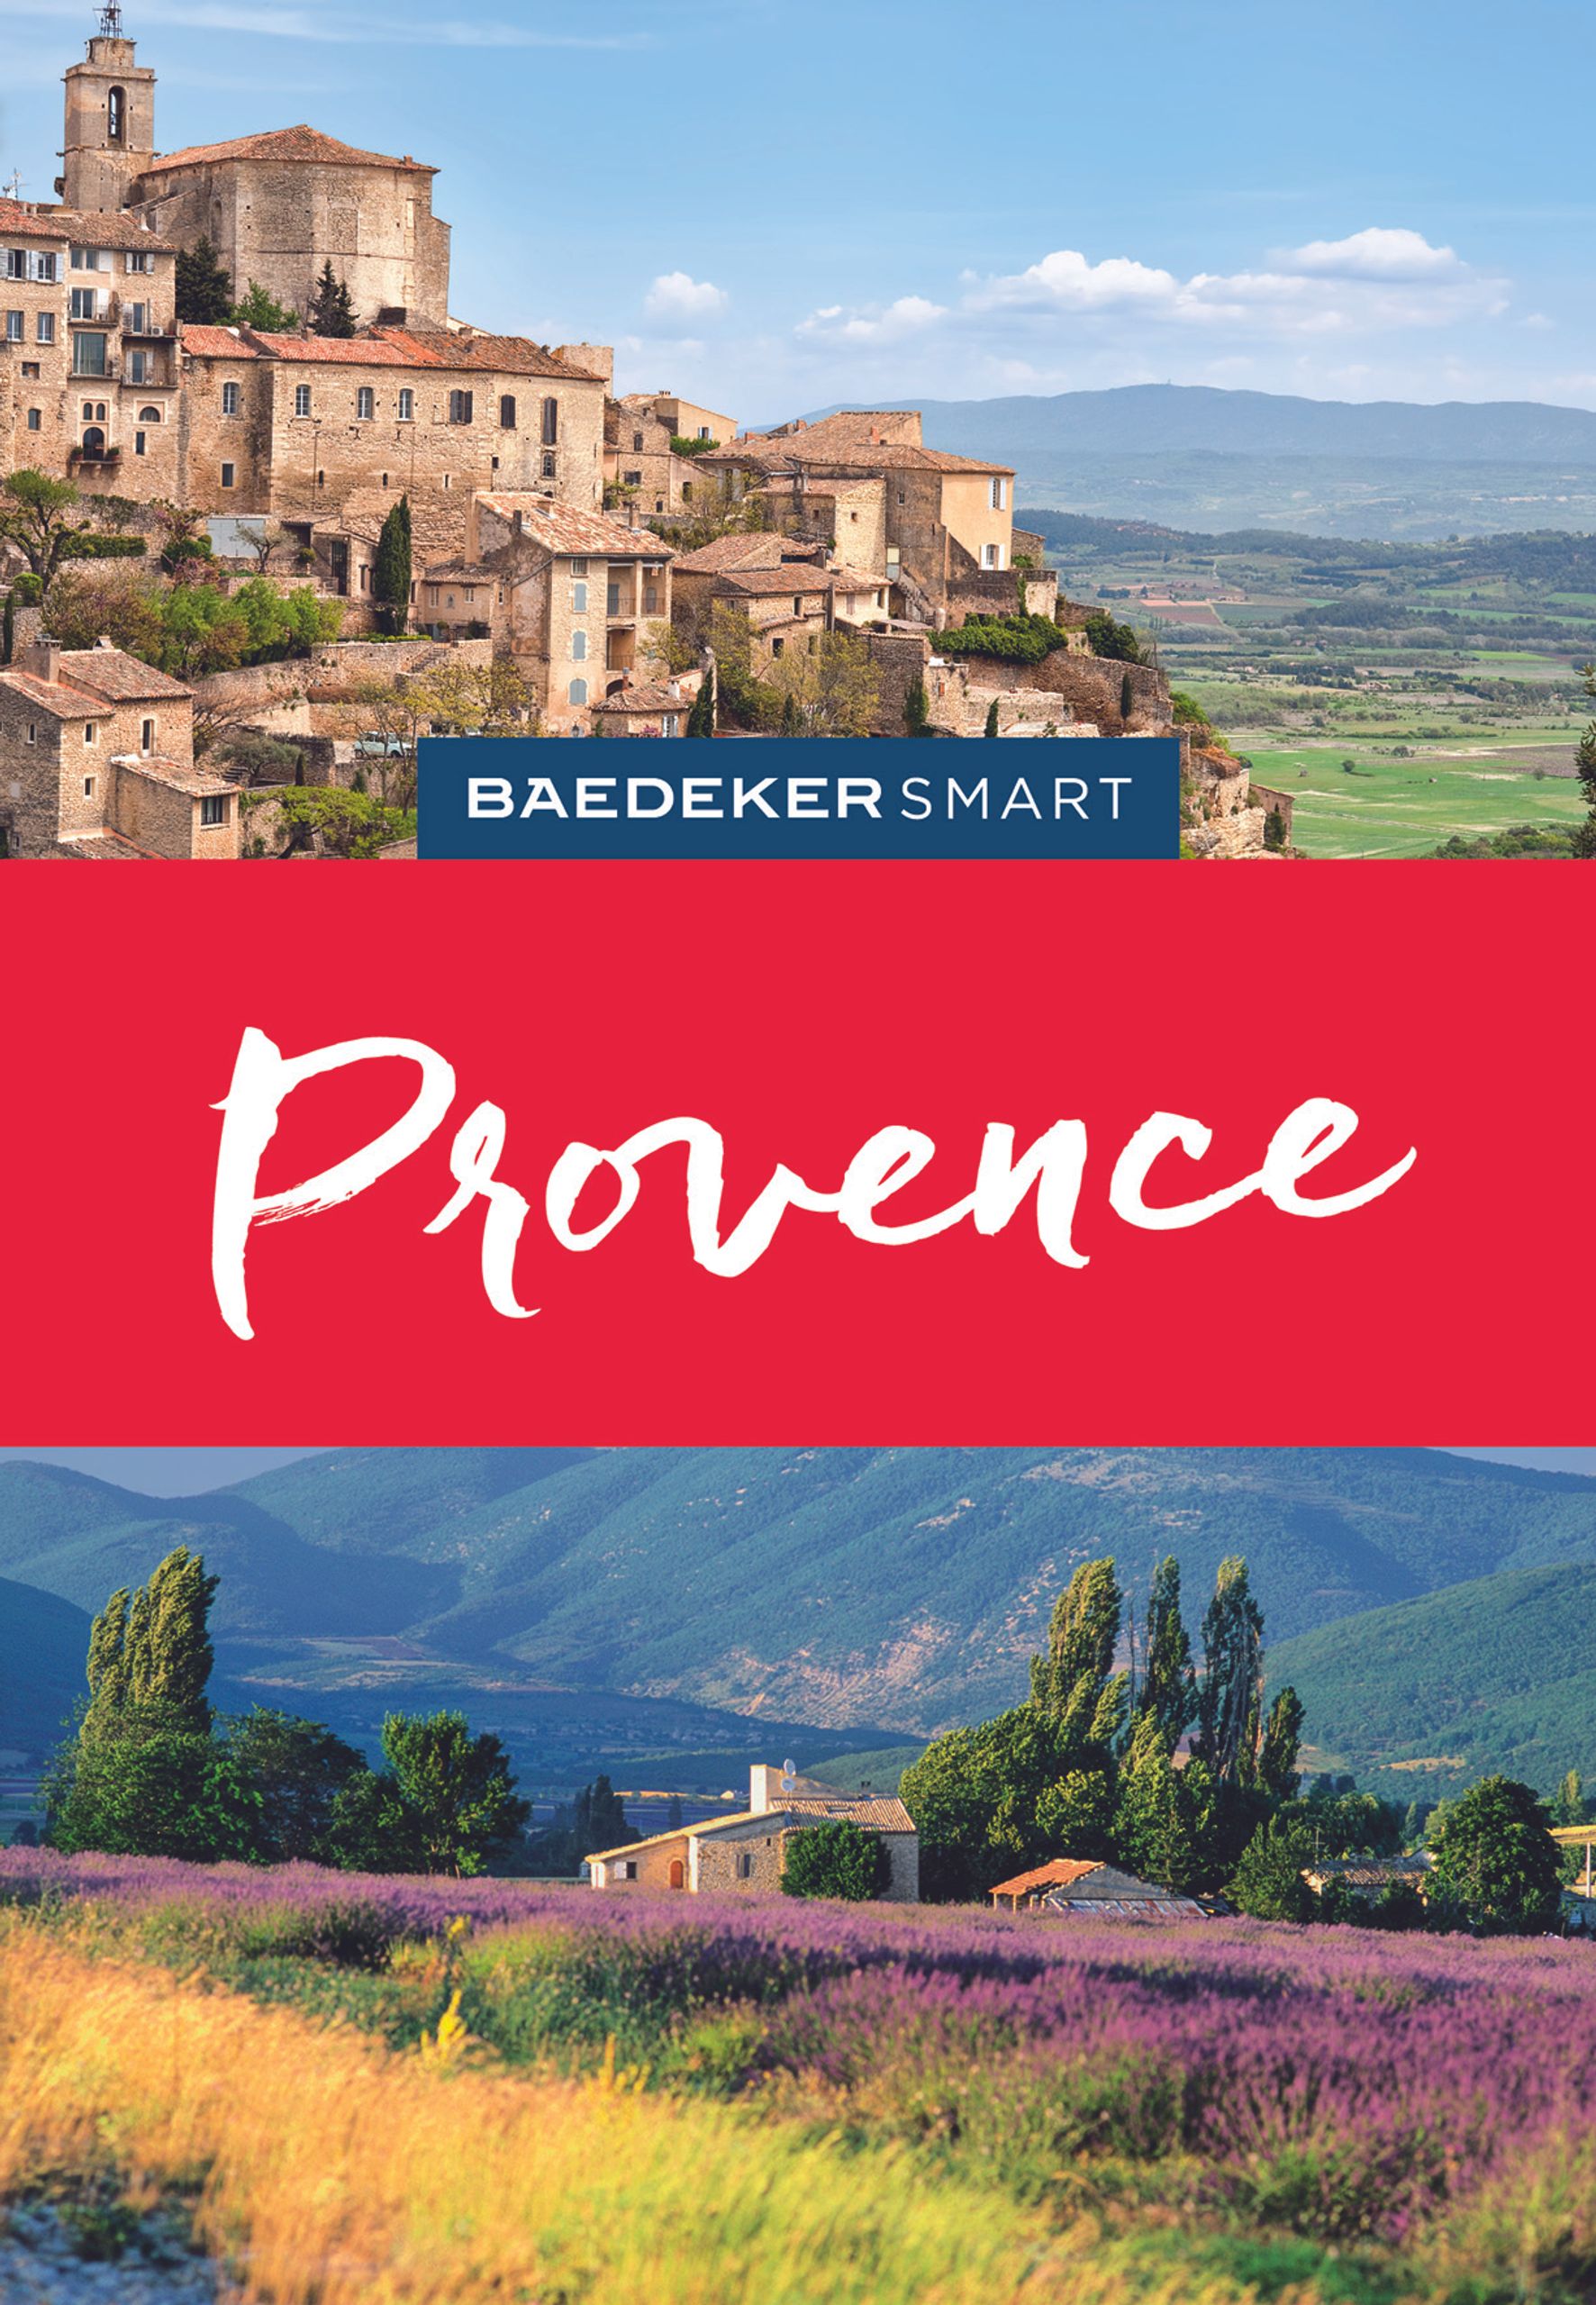 Baedeker Provence